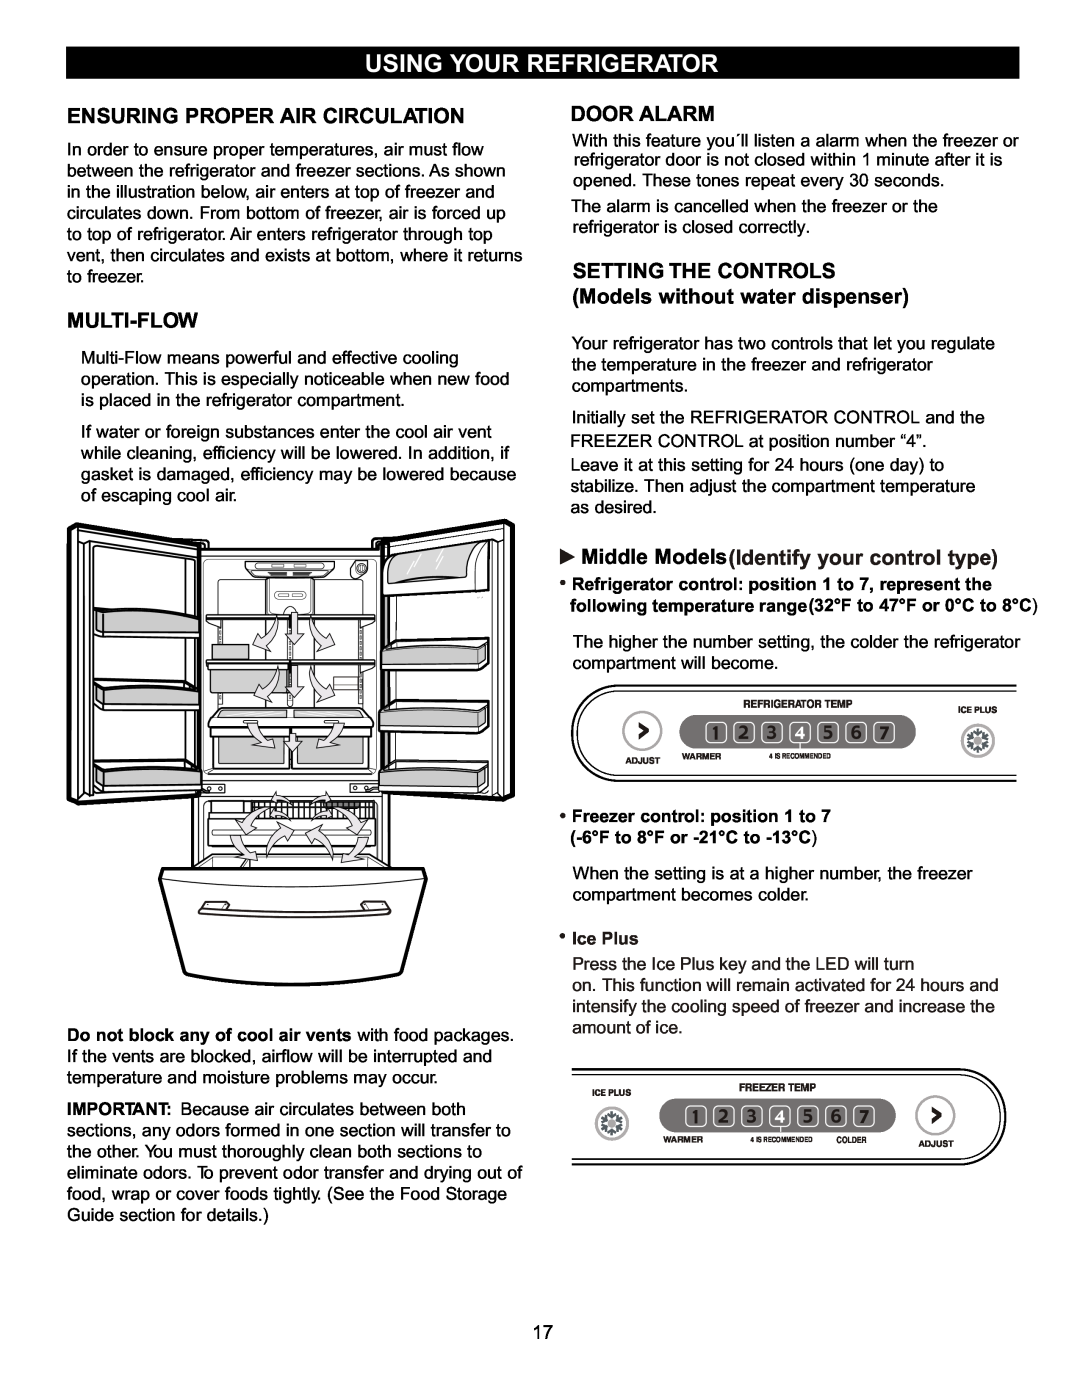 LG Electronics LFC20740 Using Your Refrigerator, Ensuring Proper Air Circulation, Multi-Flow, Door Alarm, Ice Plus 